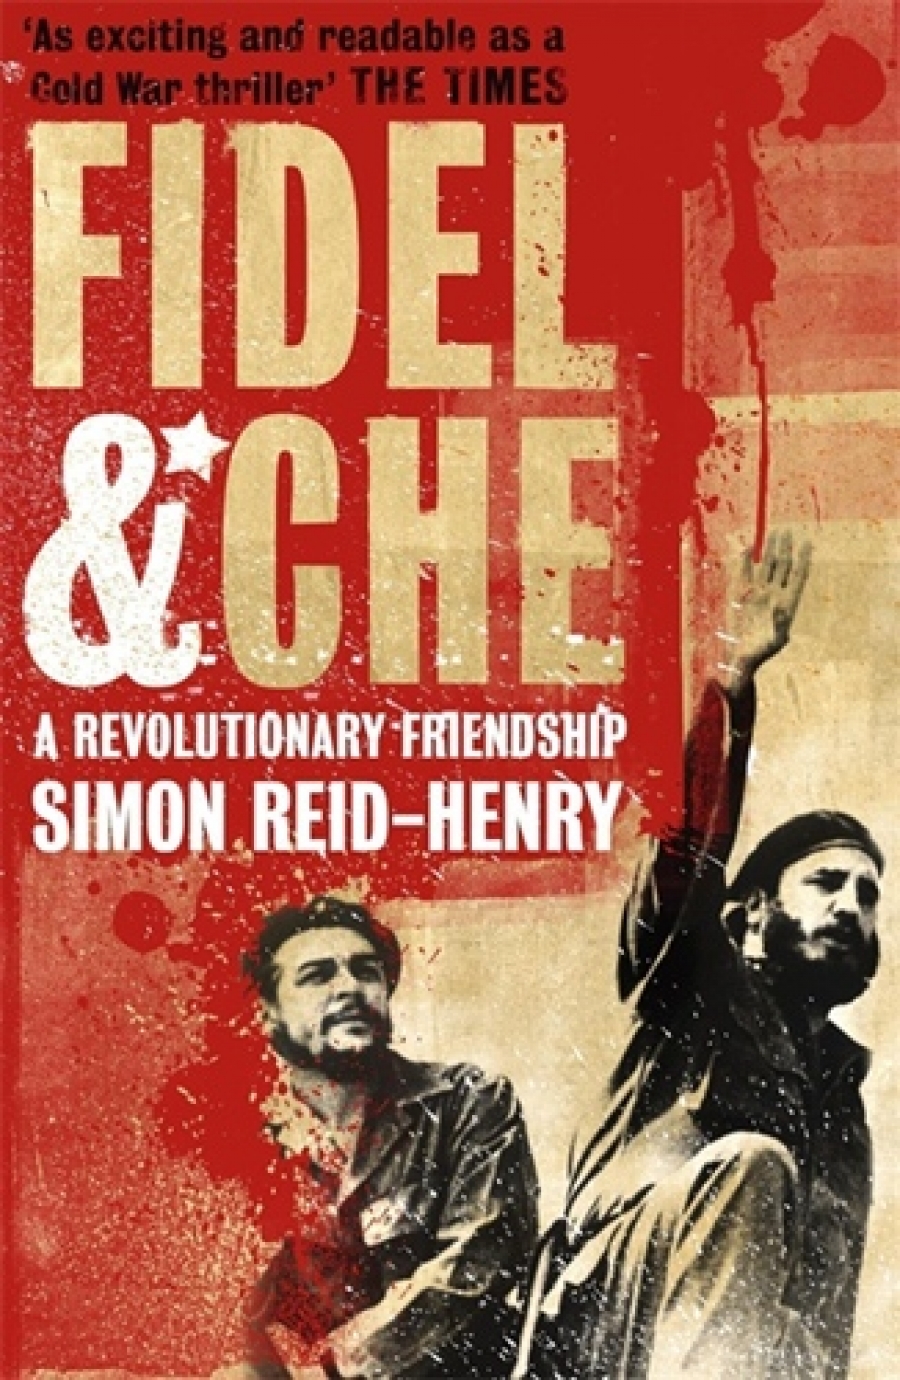 Reid-Harry, Simon Fidel and Che: Revolutionary Friendship 